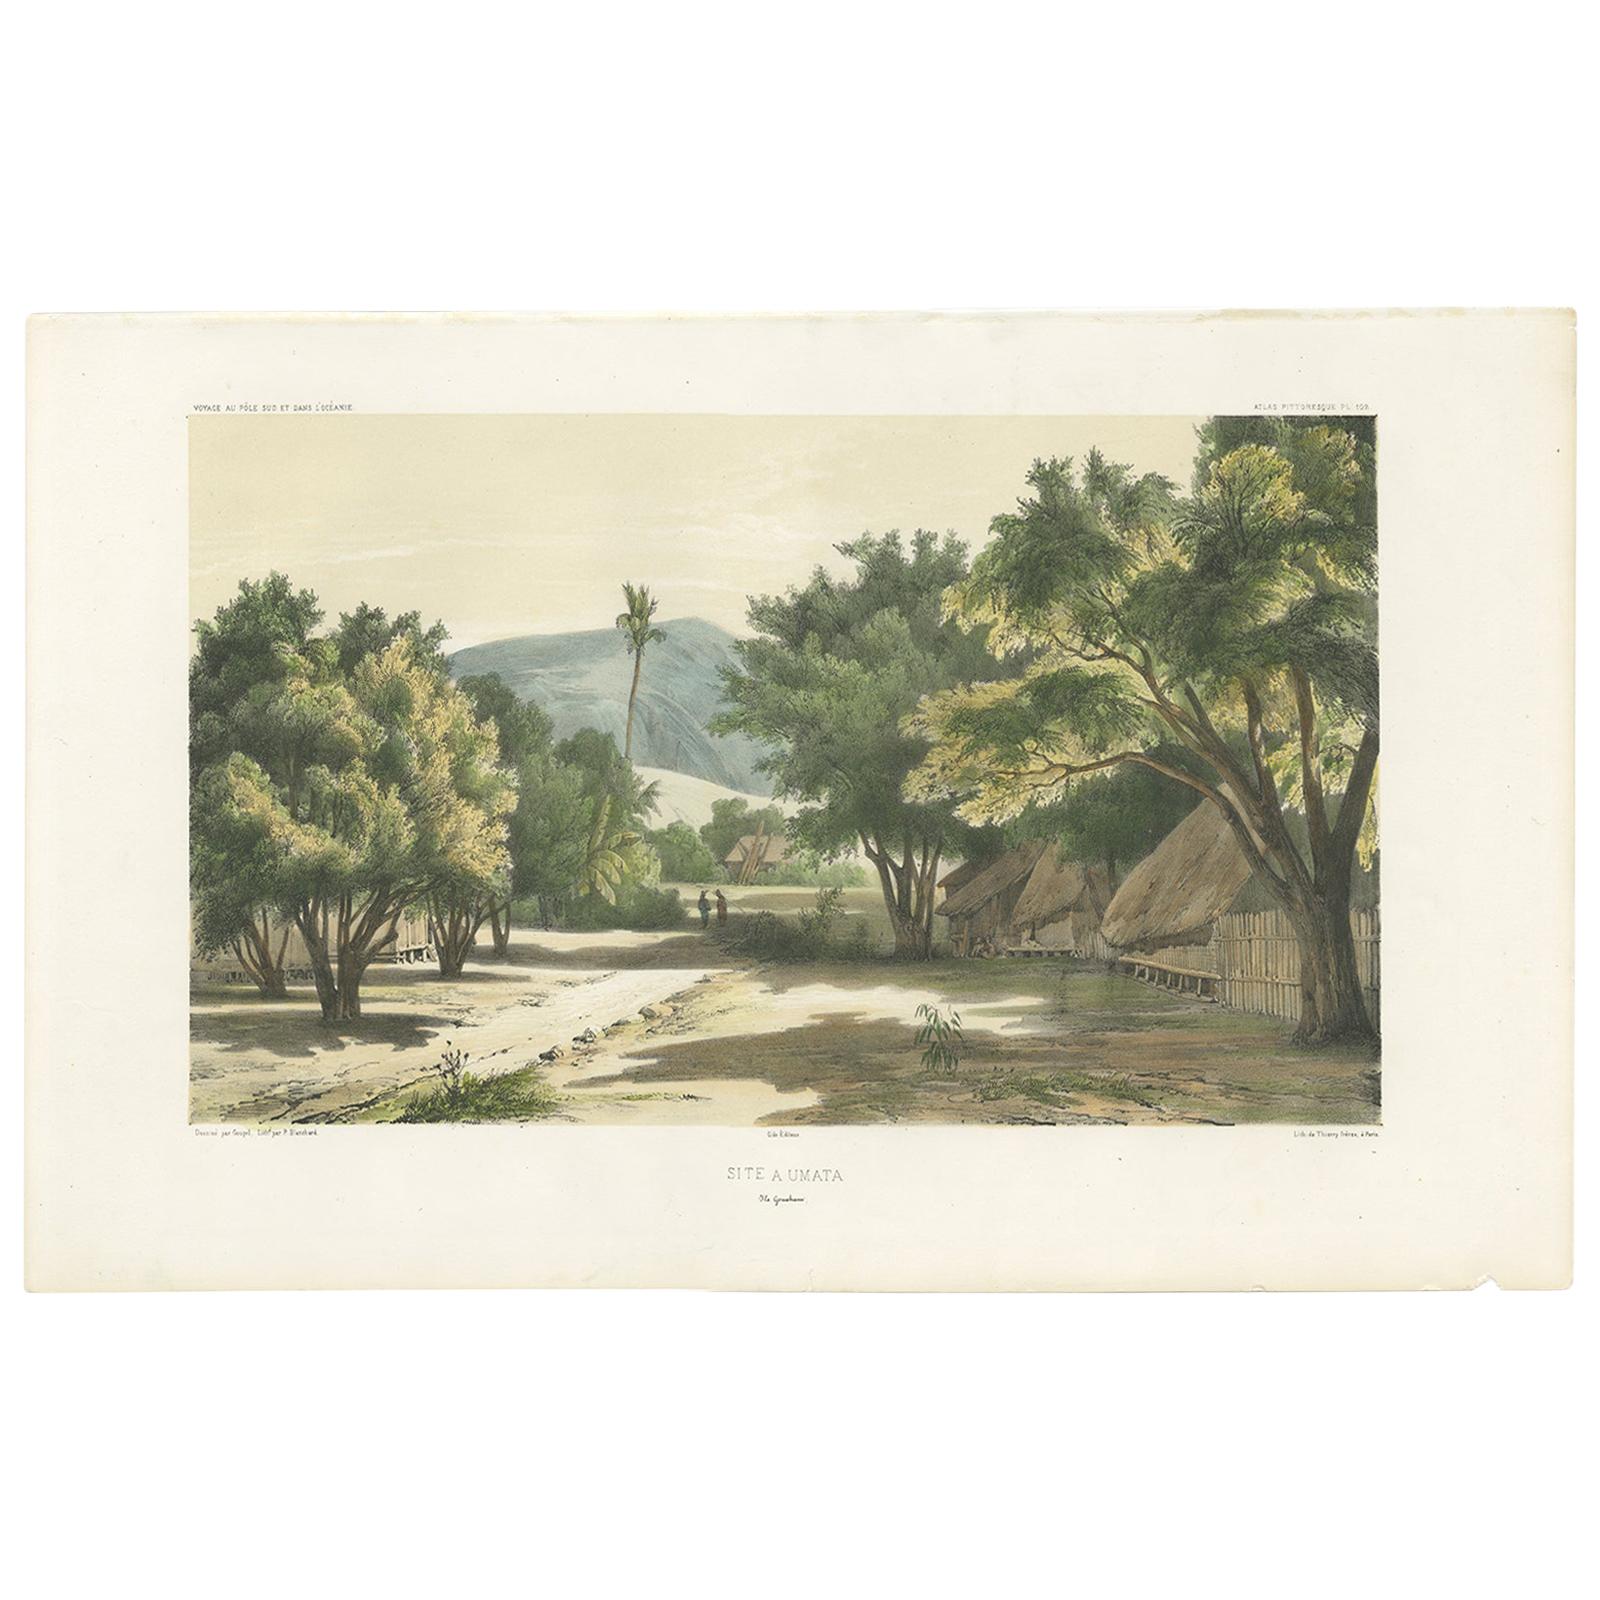 Antique Print of Umatec 'Guam' by D'Urville, circa 1850